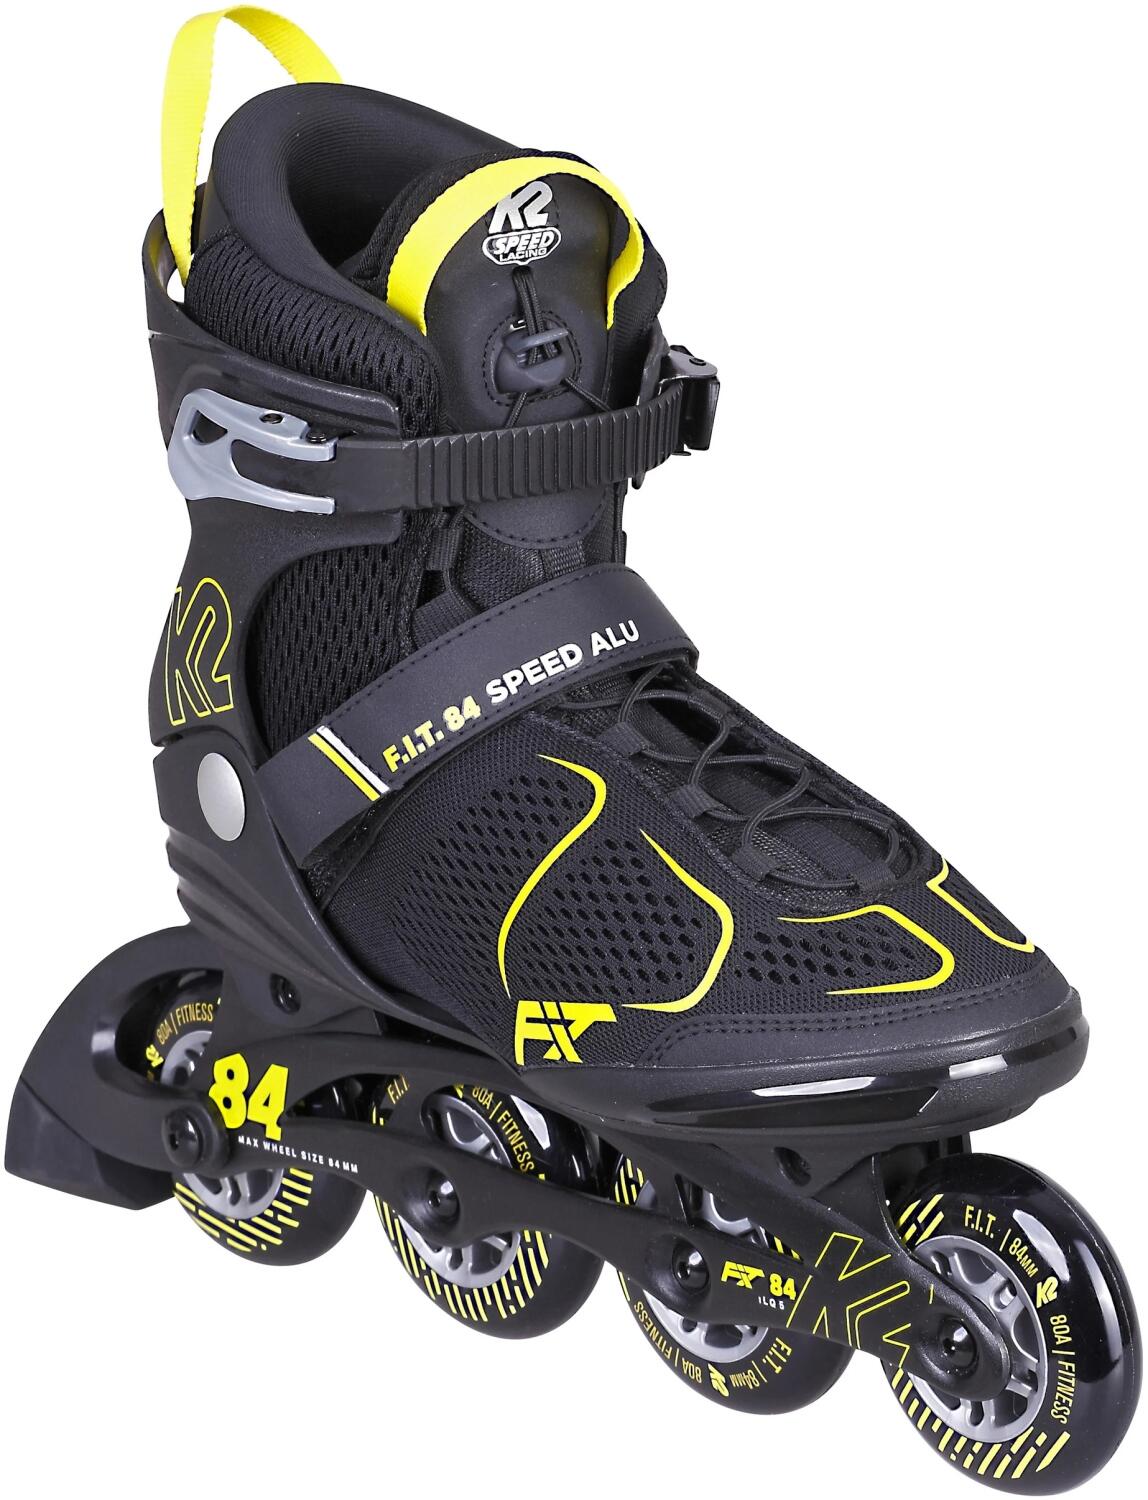 K2 Herren Fit 84 Speed Alu Sneaker, Design, 42.5 EU